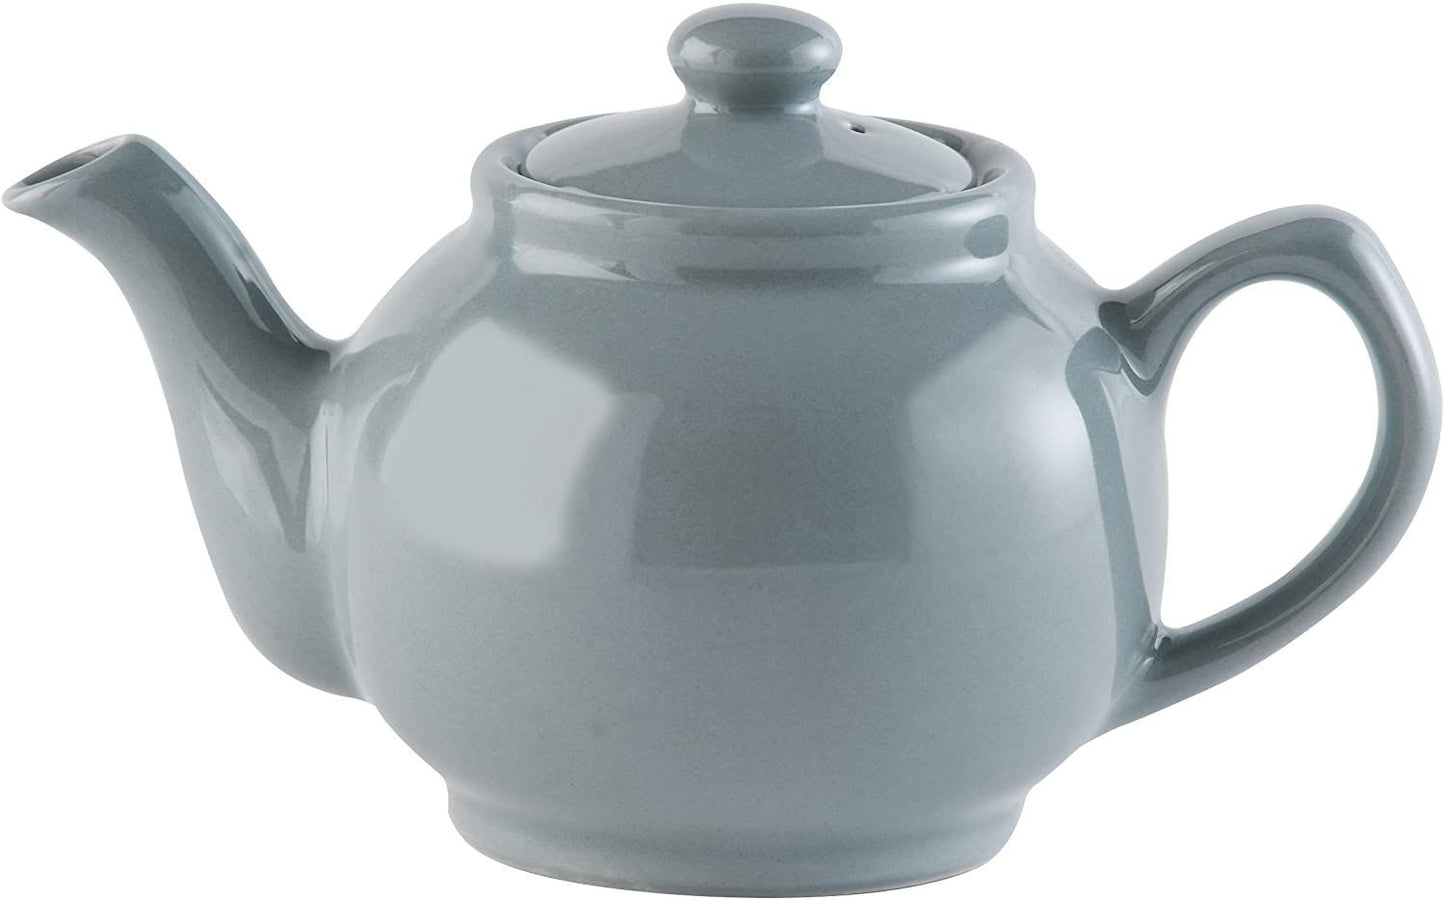 Kilner Price & Kensington 2 Cup Teapot, Gloss Grey